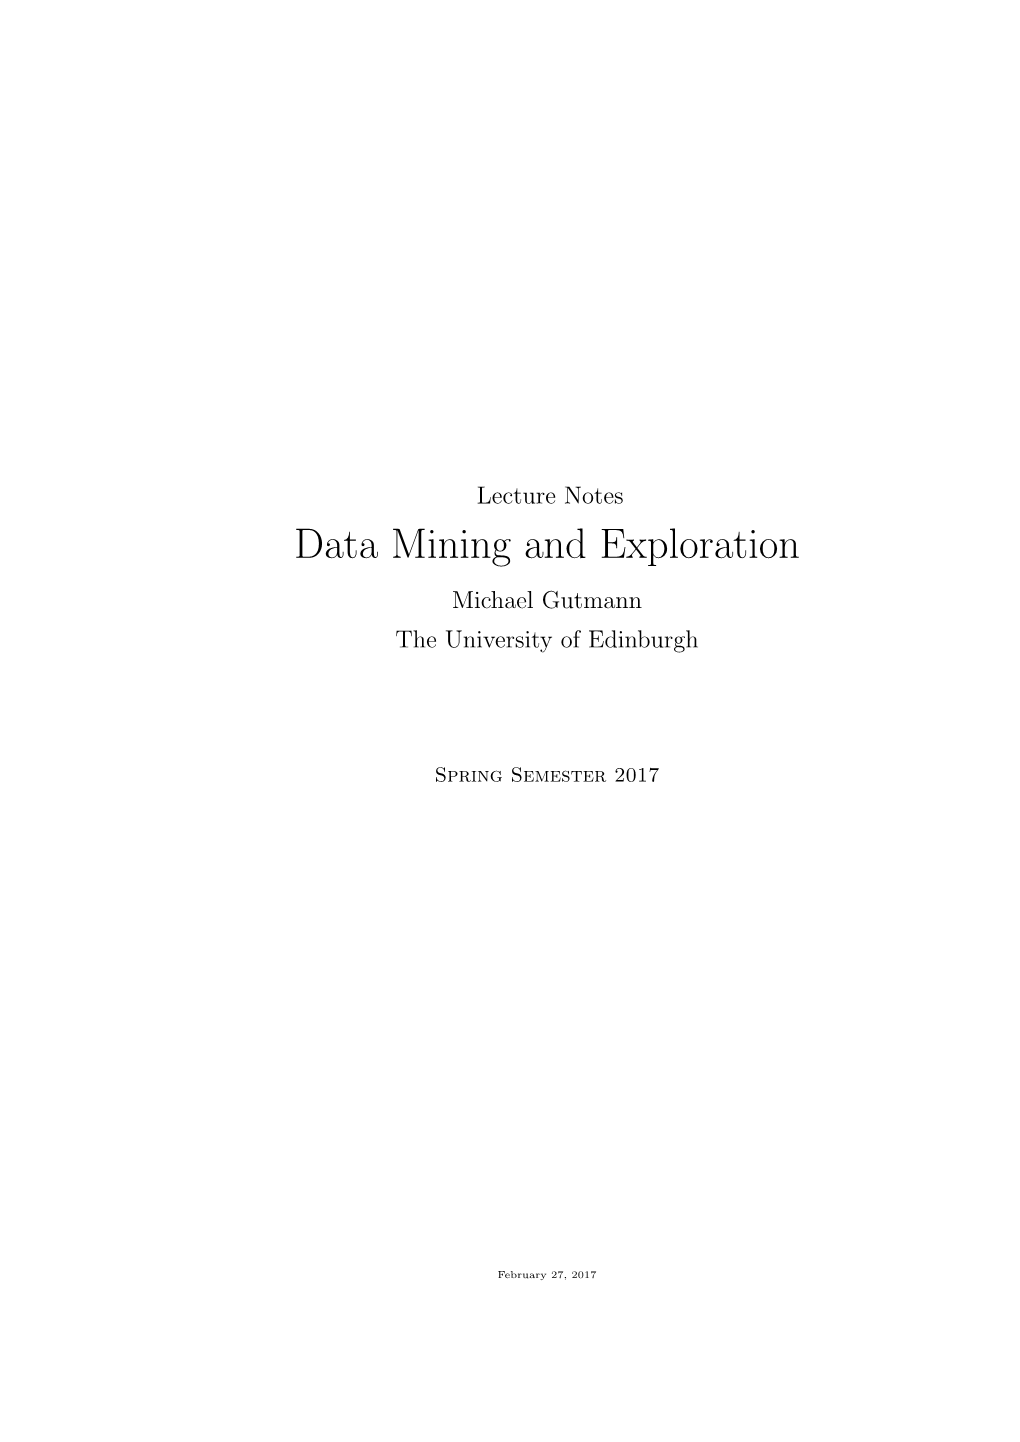 Data Mining and Exploration Michael Gutmann the University of Edinburgh